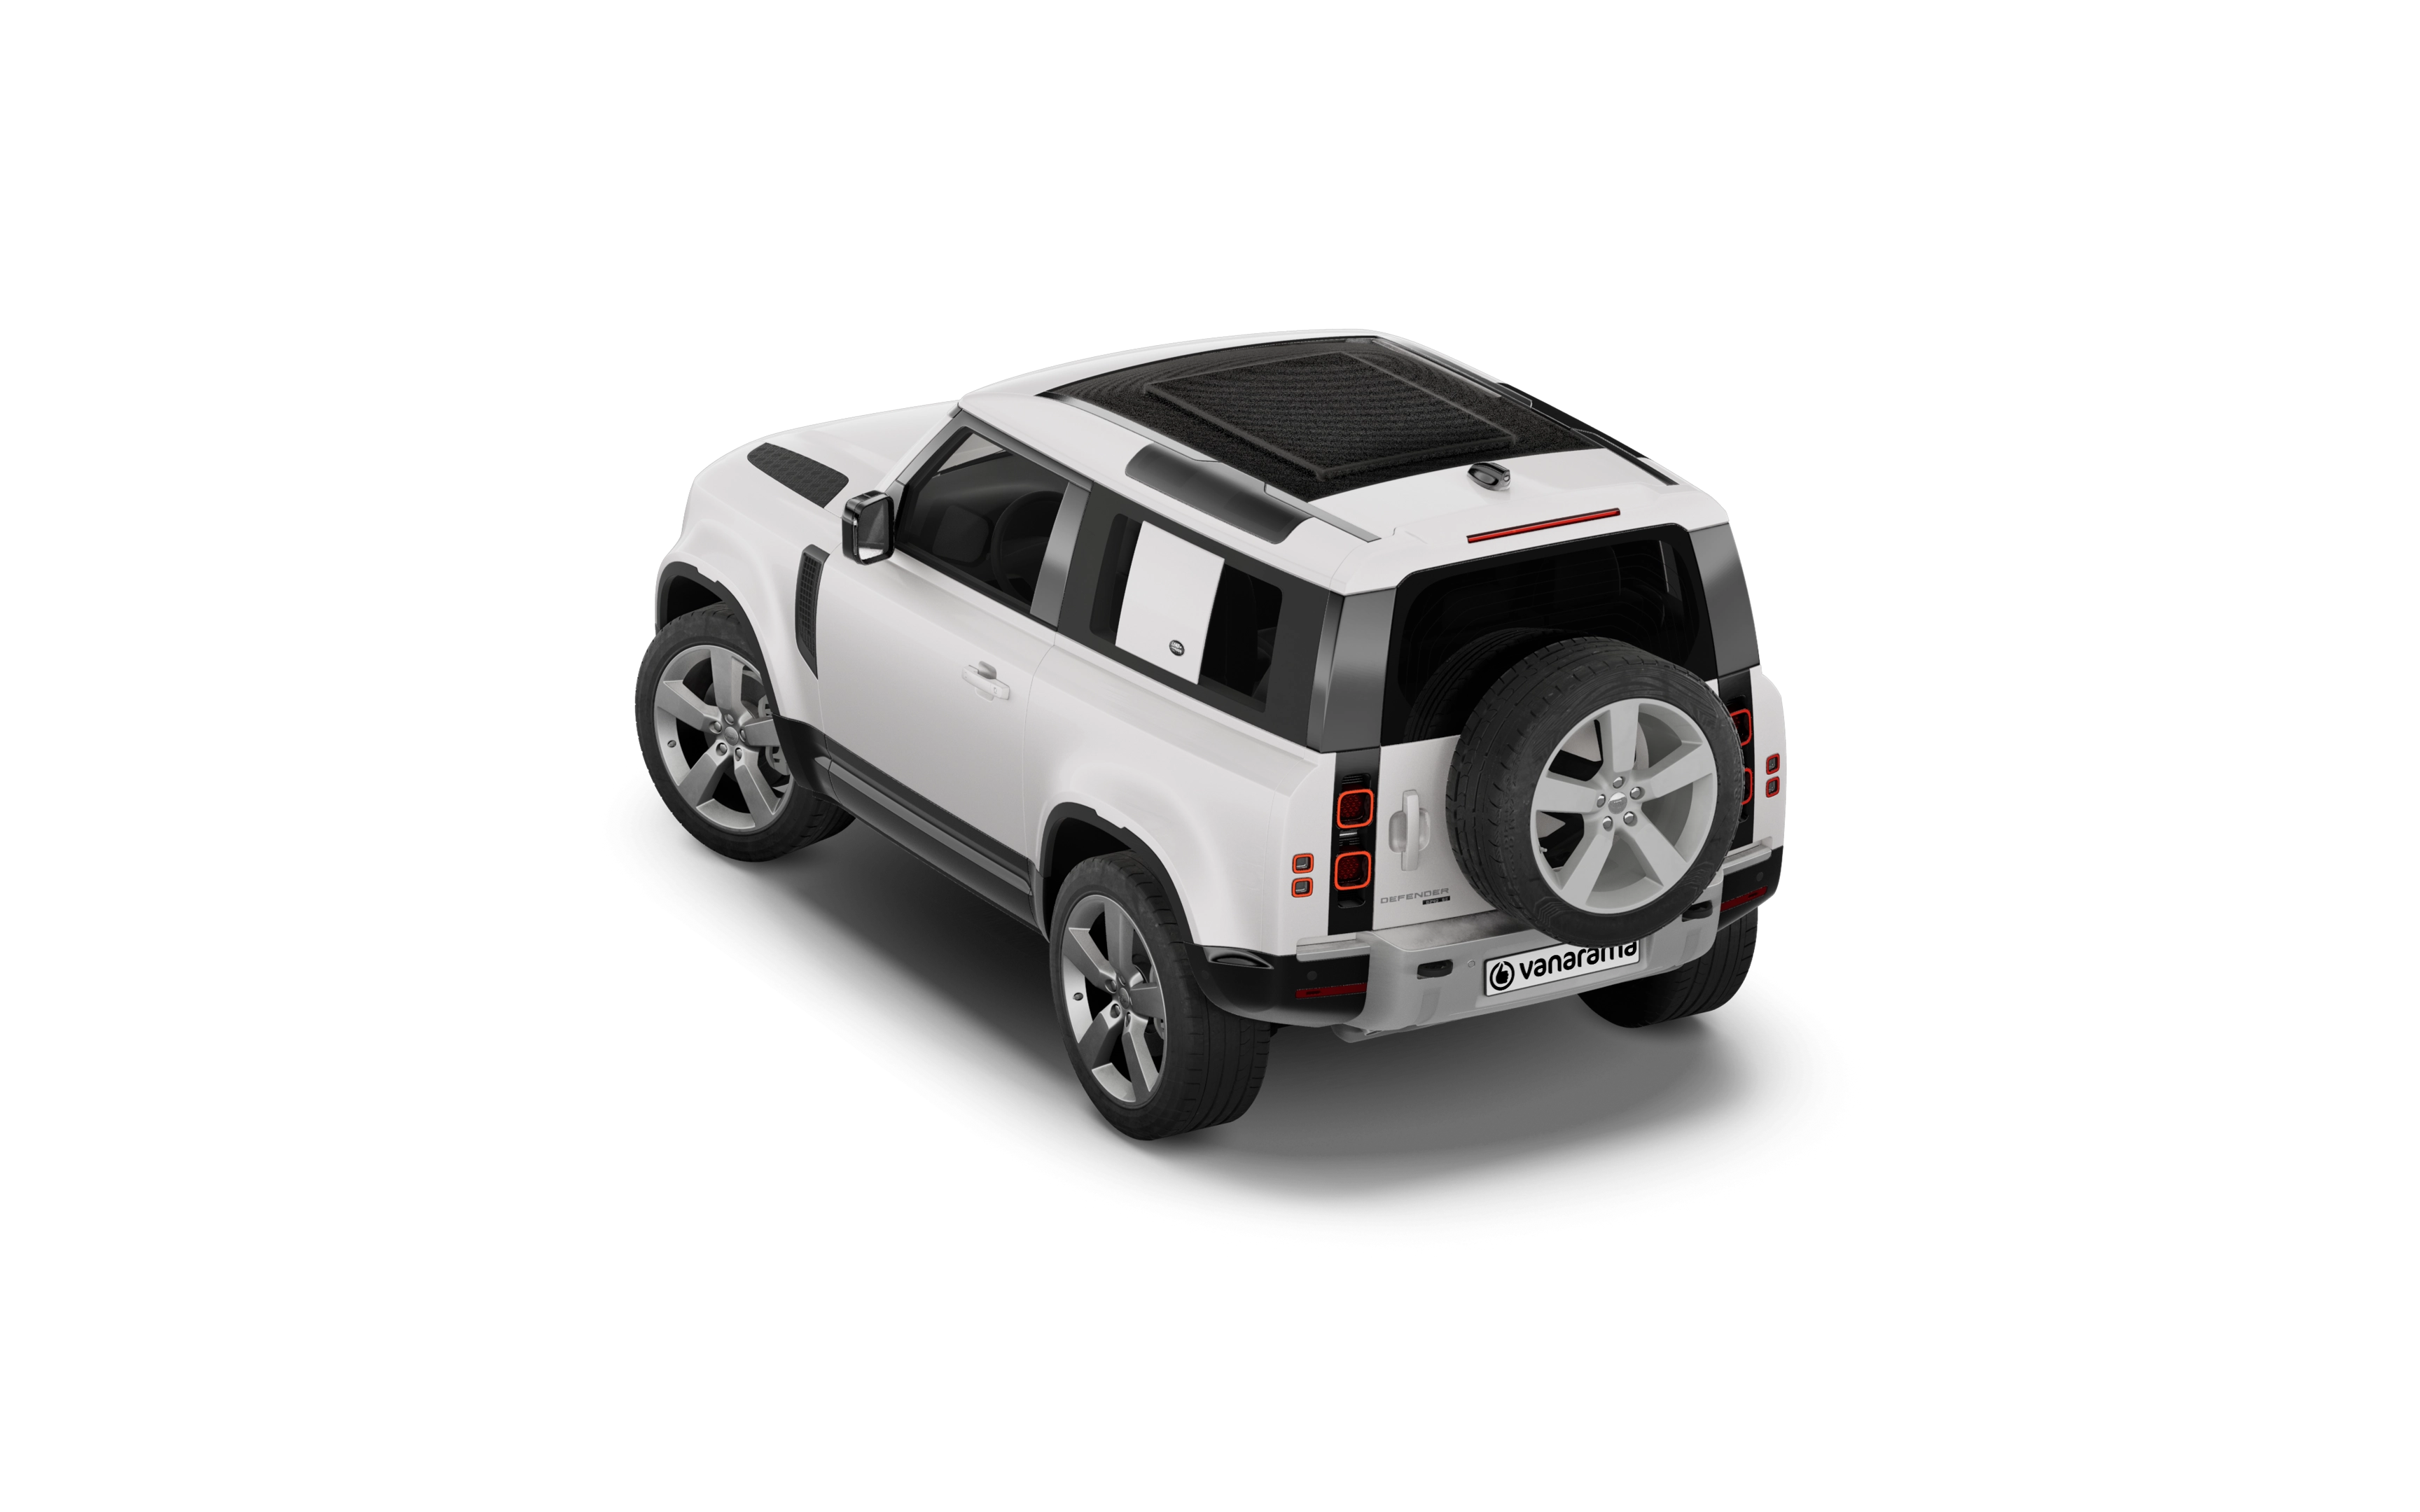 Land rover defender estate 3.0 p400 xs edition 110 5 doors auto